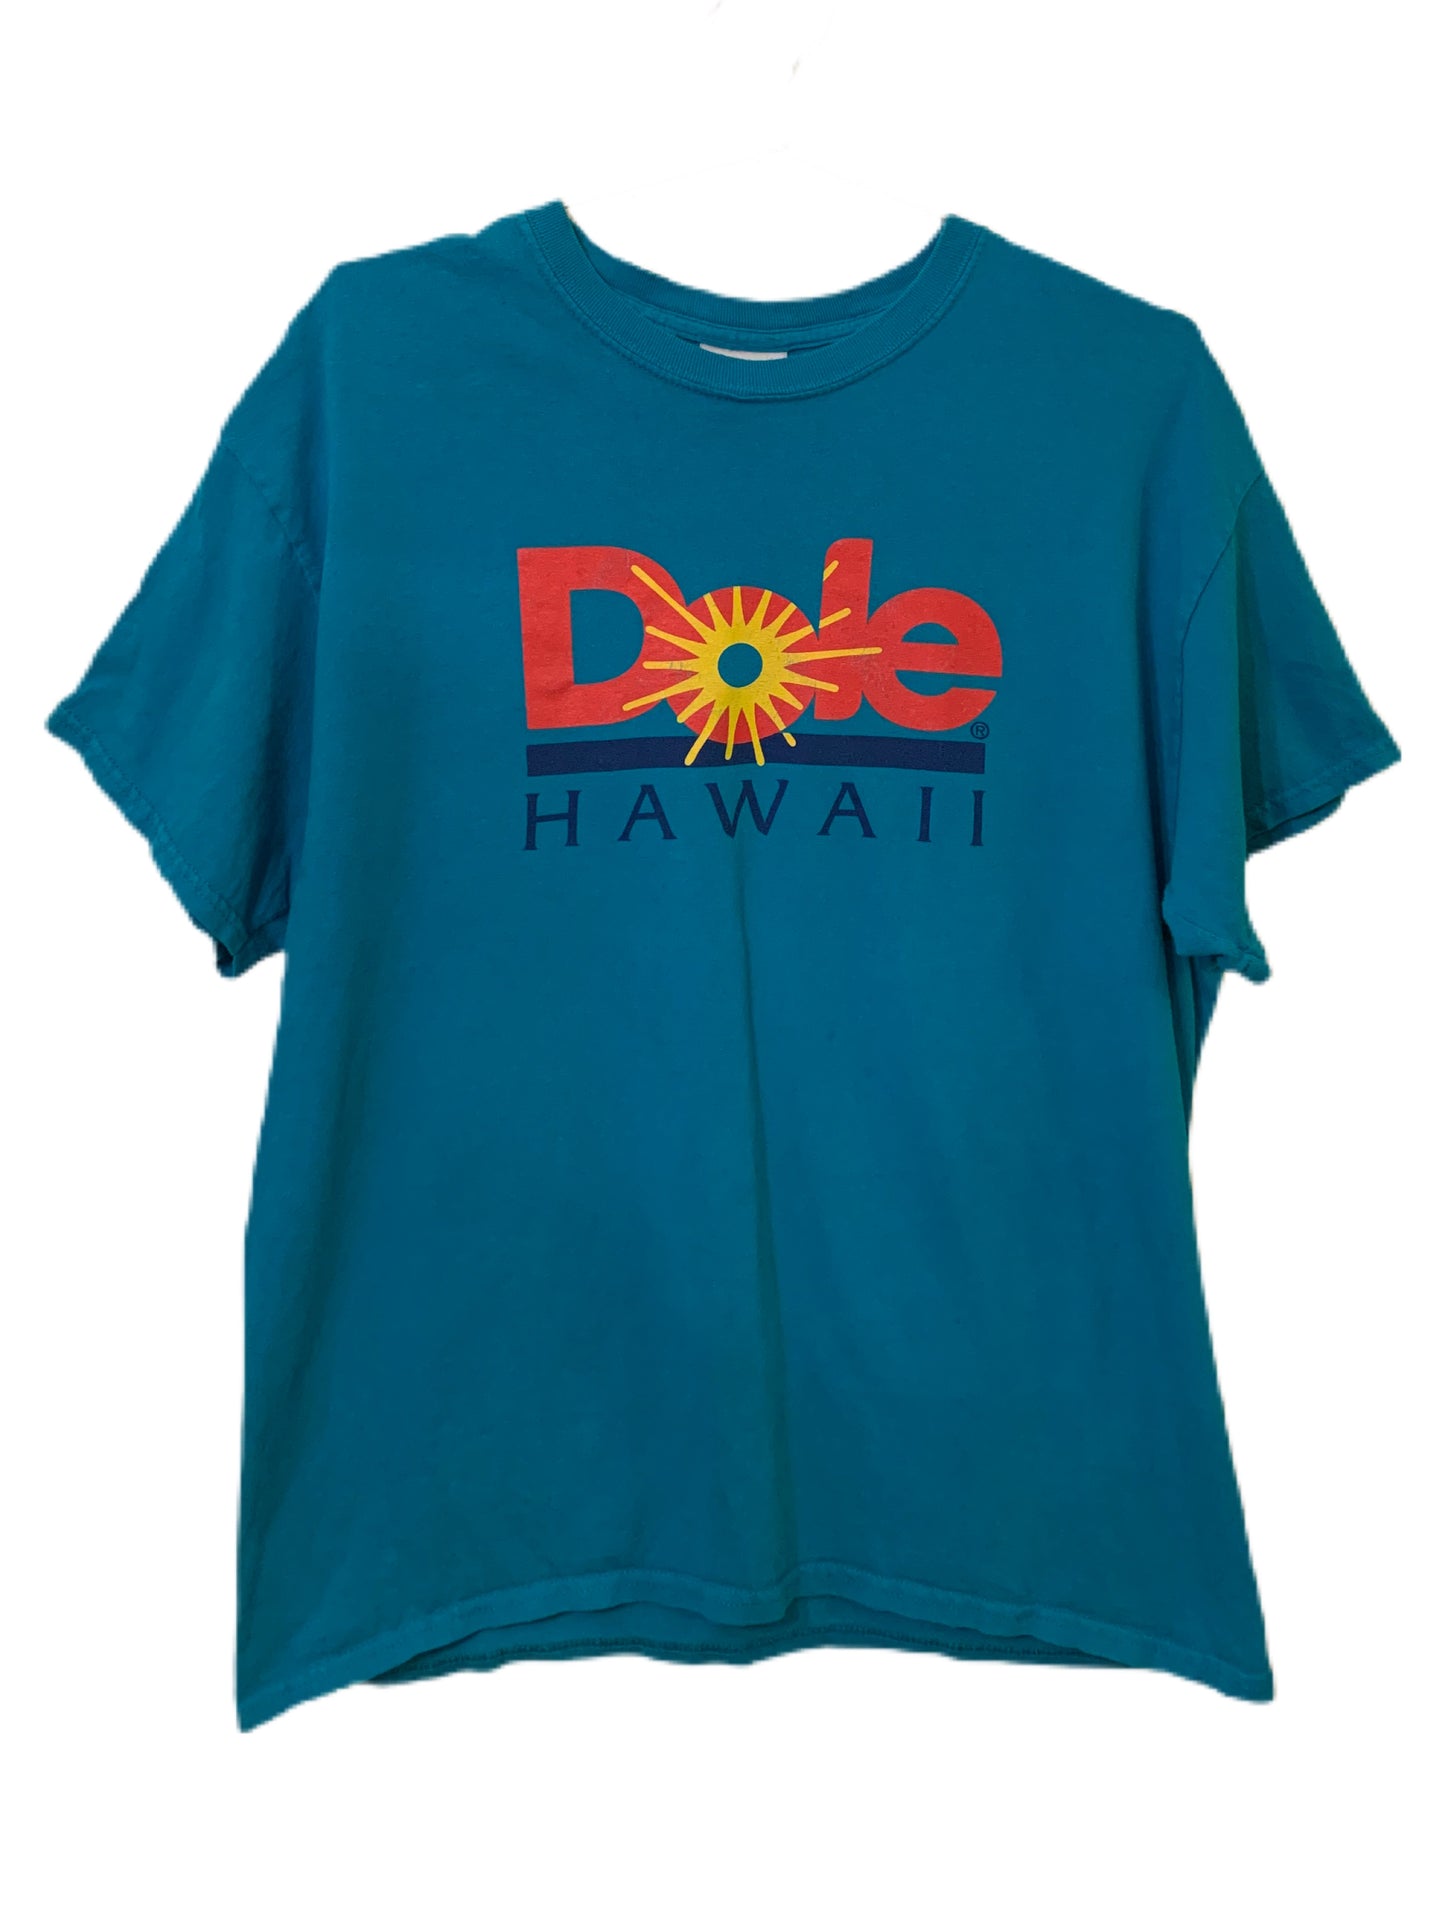 Vintage Authentic Dole Hawaii Shirt